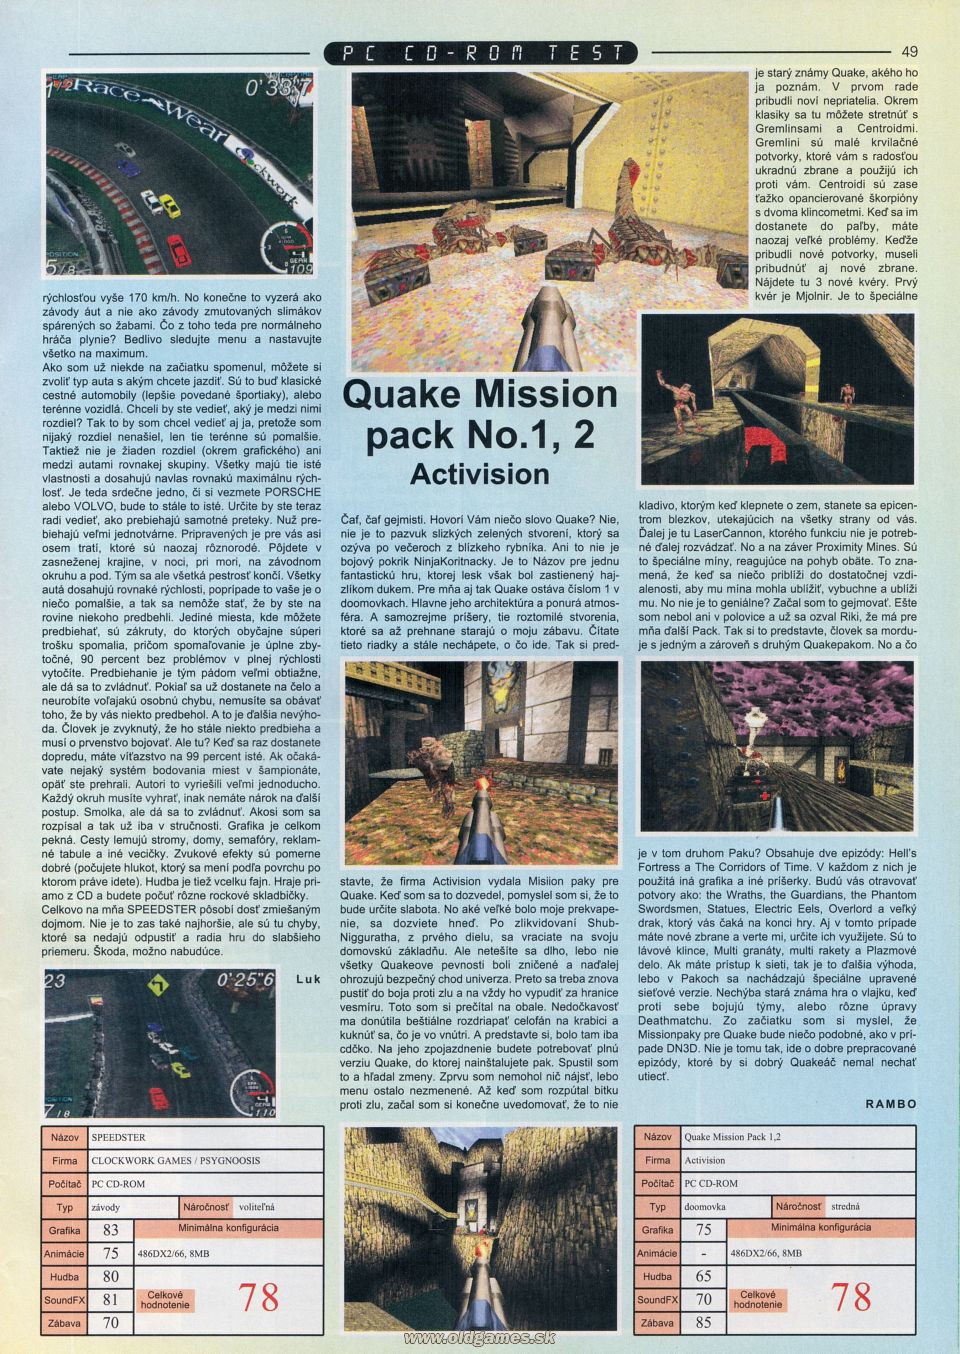 Quake Mission Pack 1,2